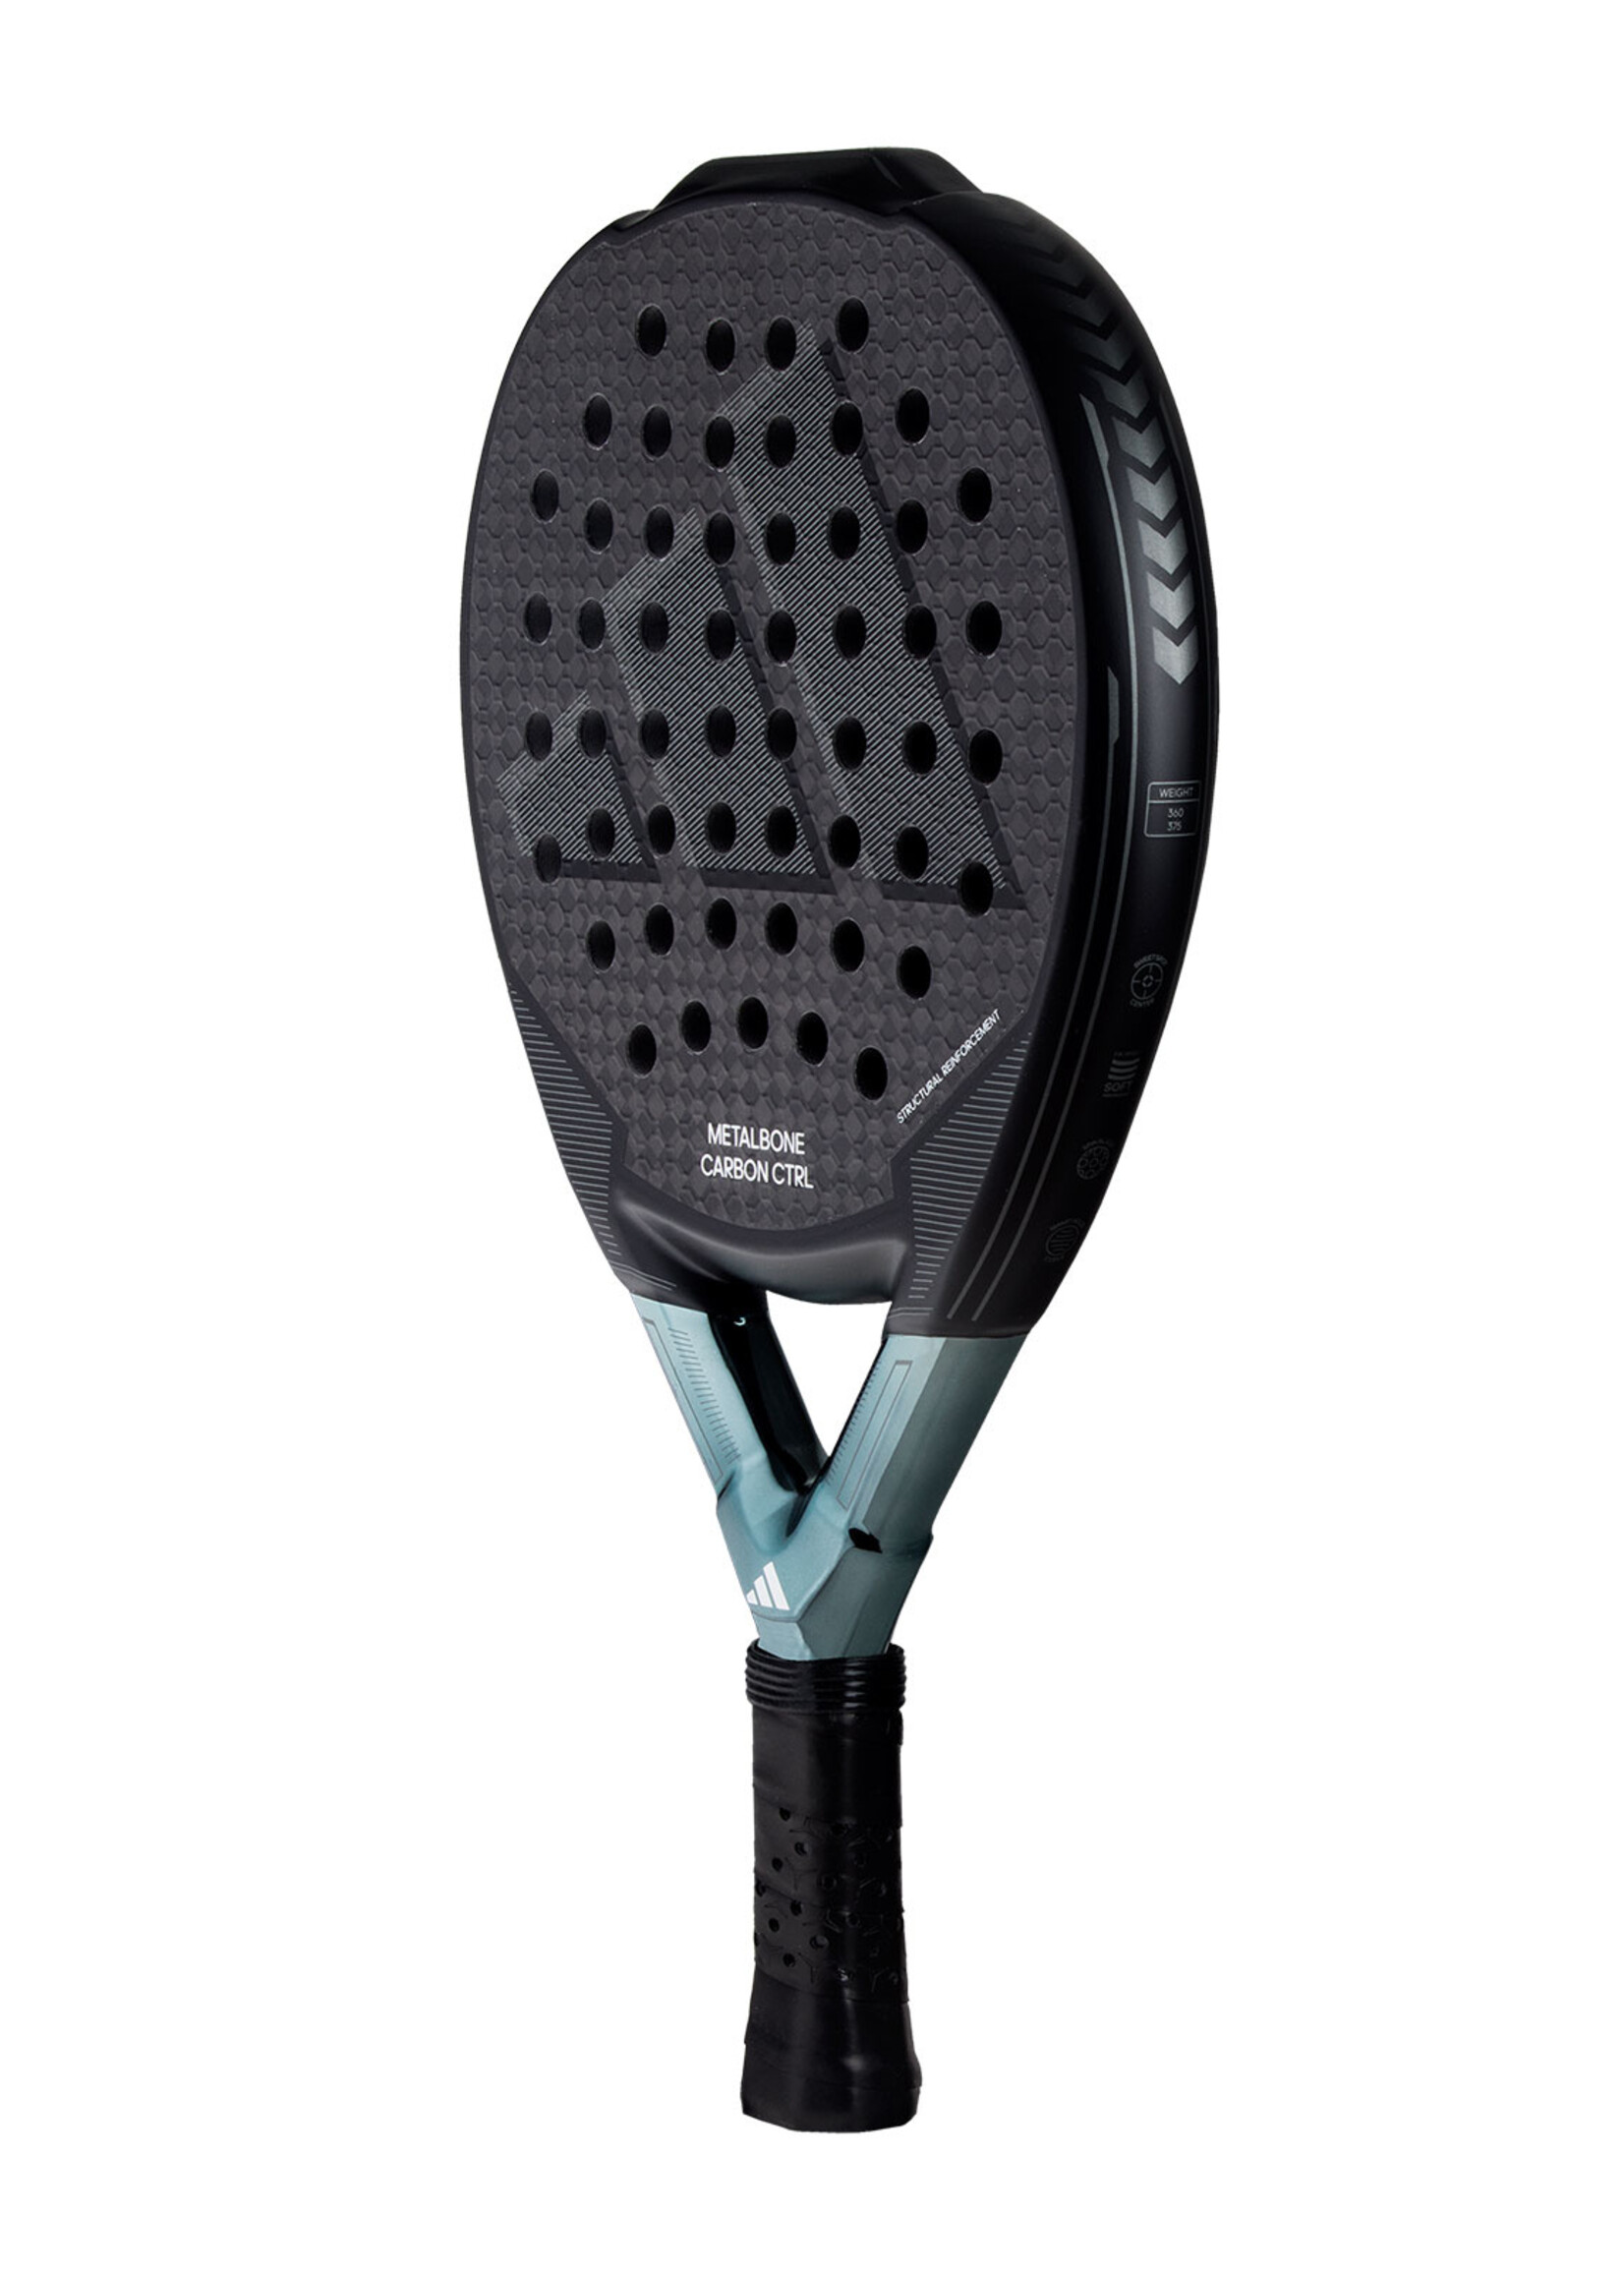 adidas Adidas Metalbone Carbon Ctrl 3.3 Padel Racquet